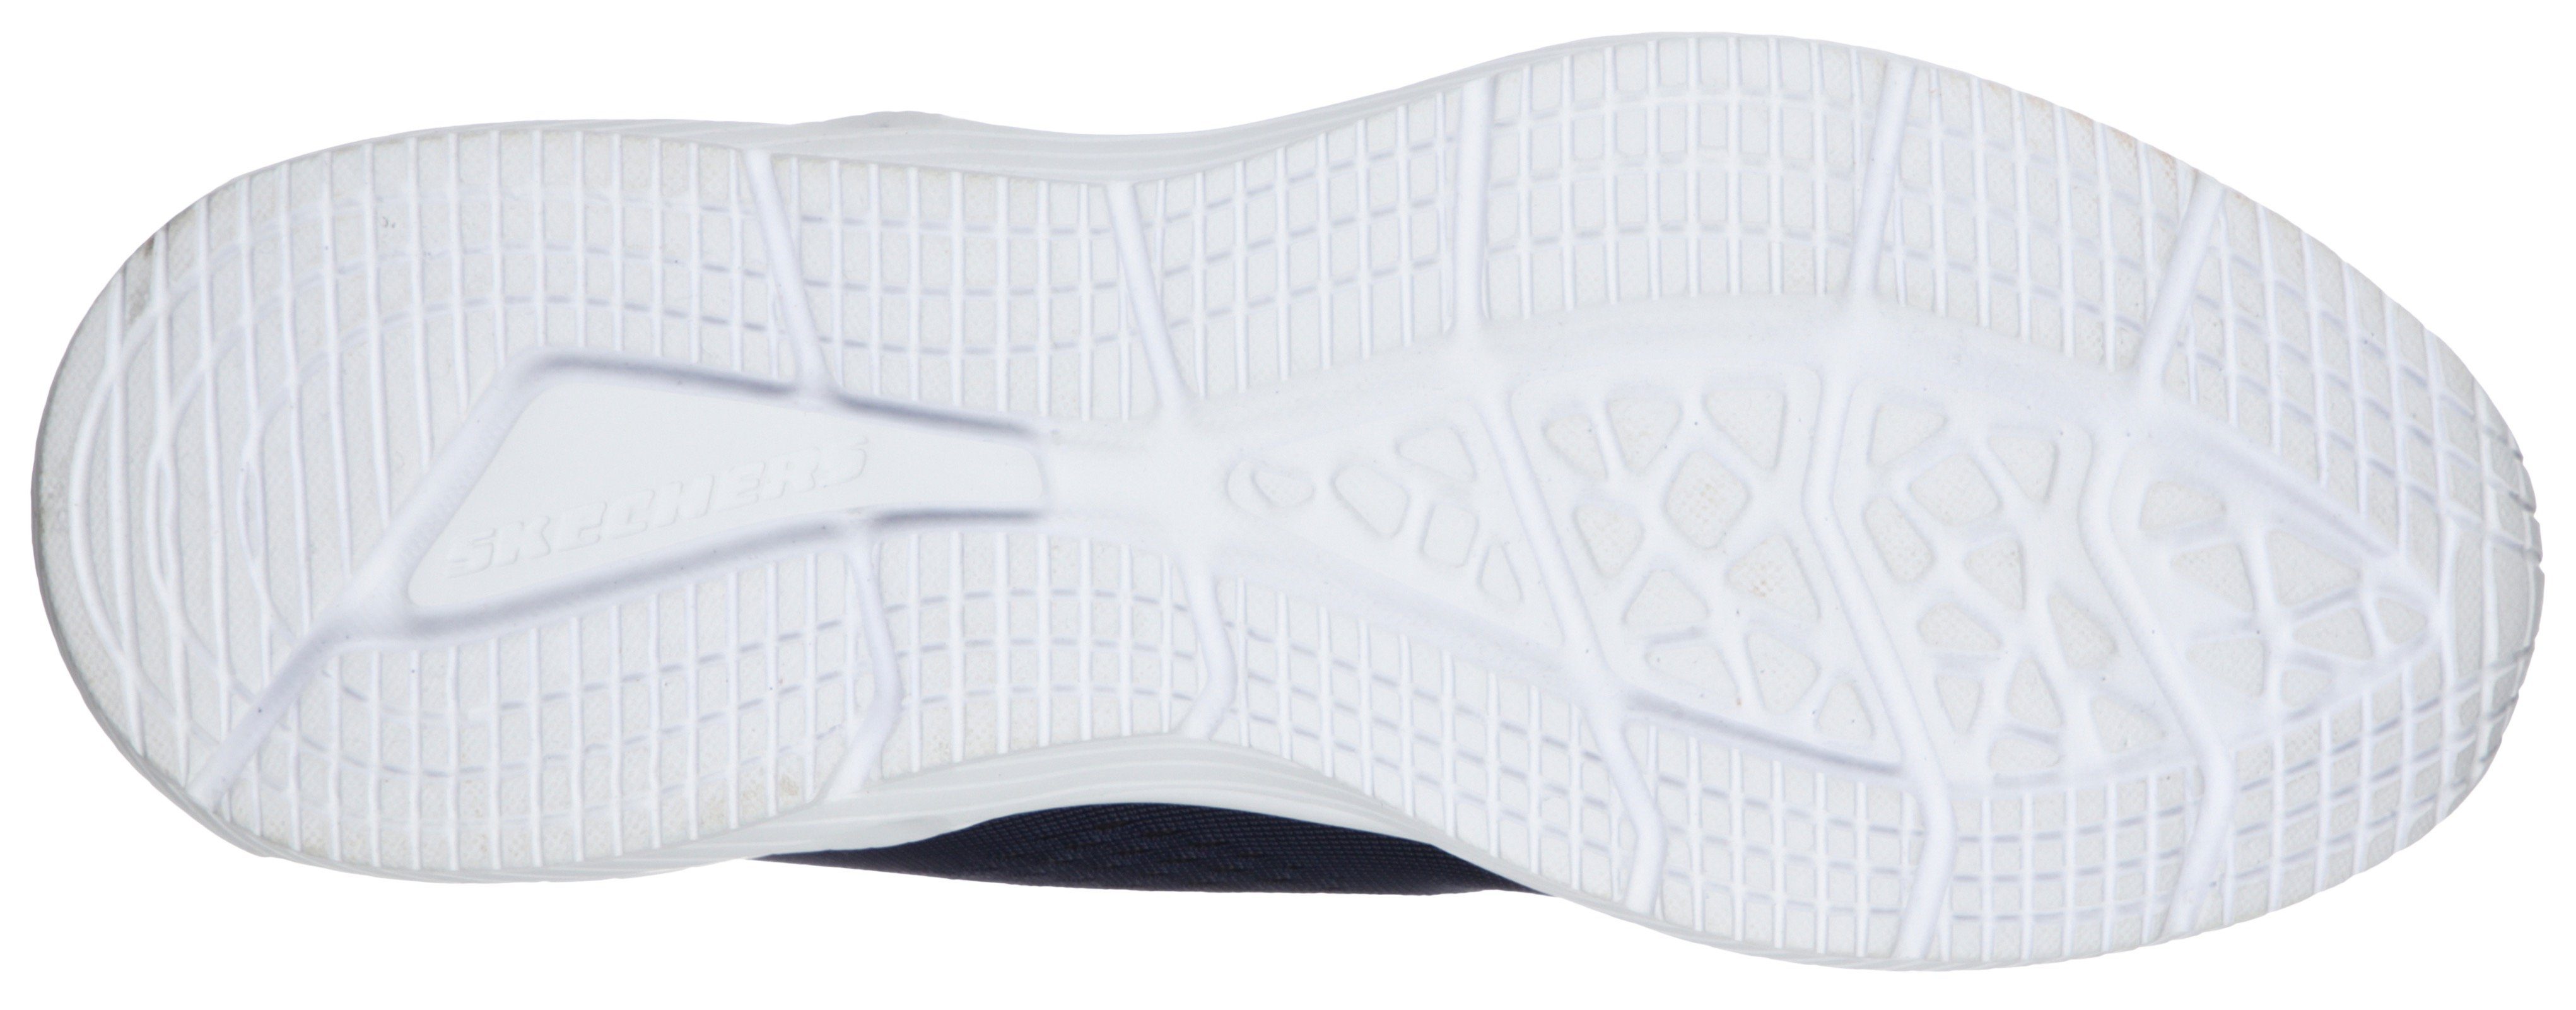 Dyna mit Memory Air-Cooled Foam Air Sneaker Skechers navy